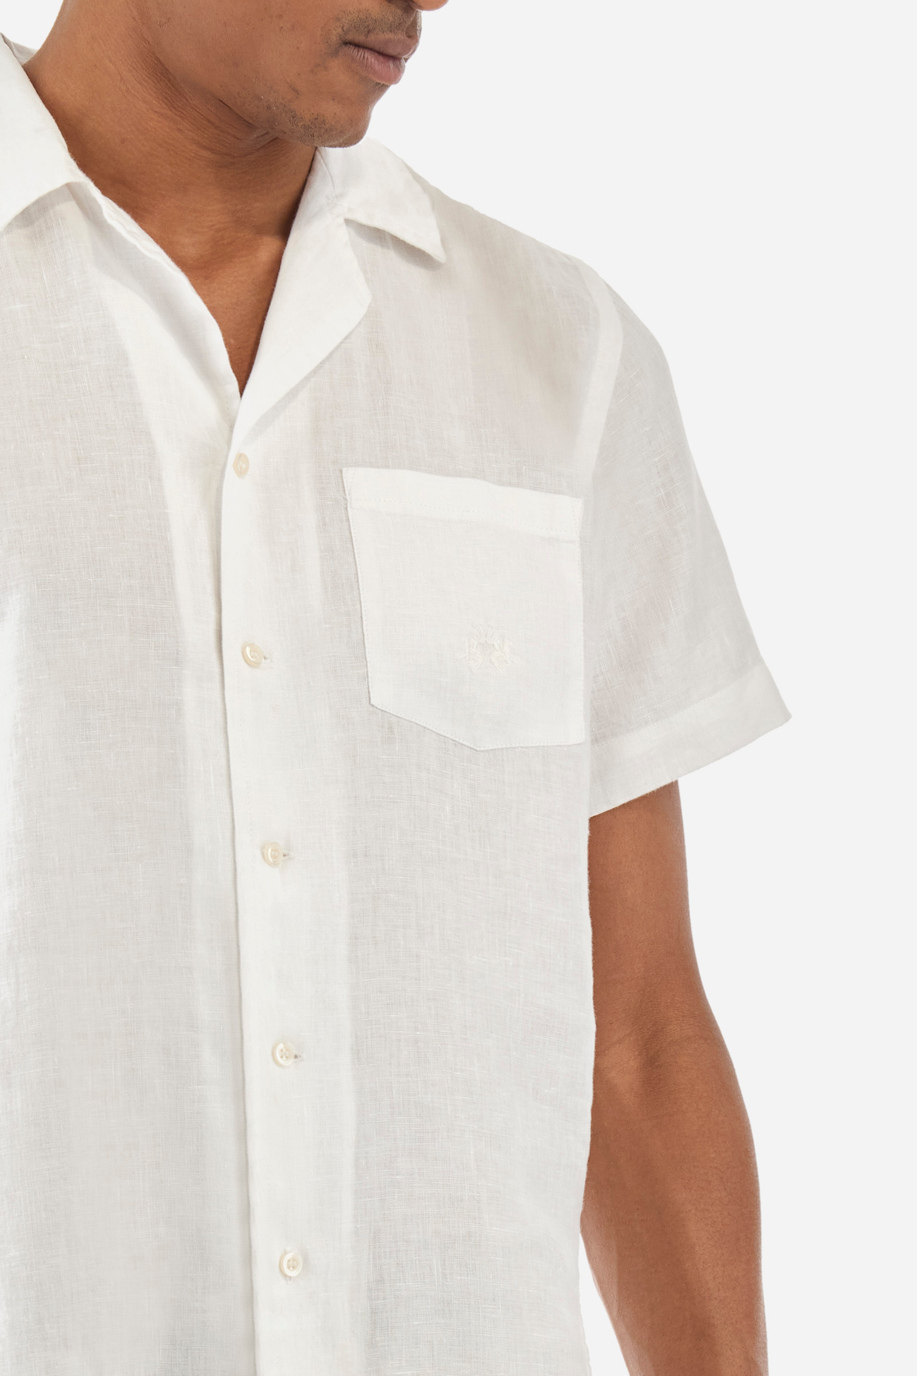 Short-sleeved linen shirt - Varoun - XLarge sizes | La Martina - Official Online Shop